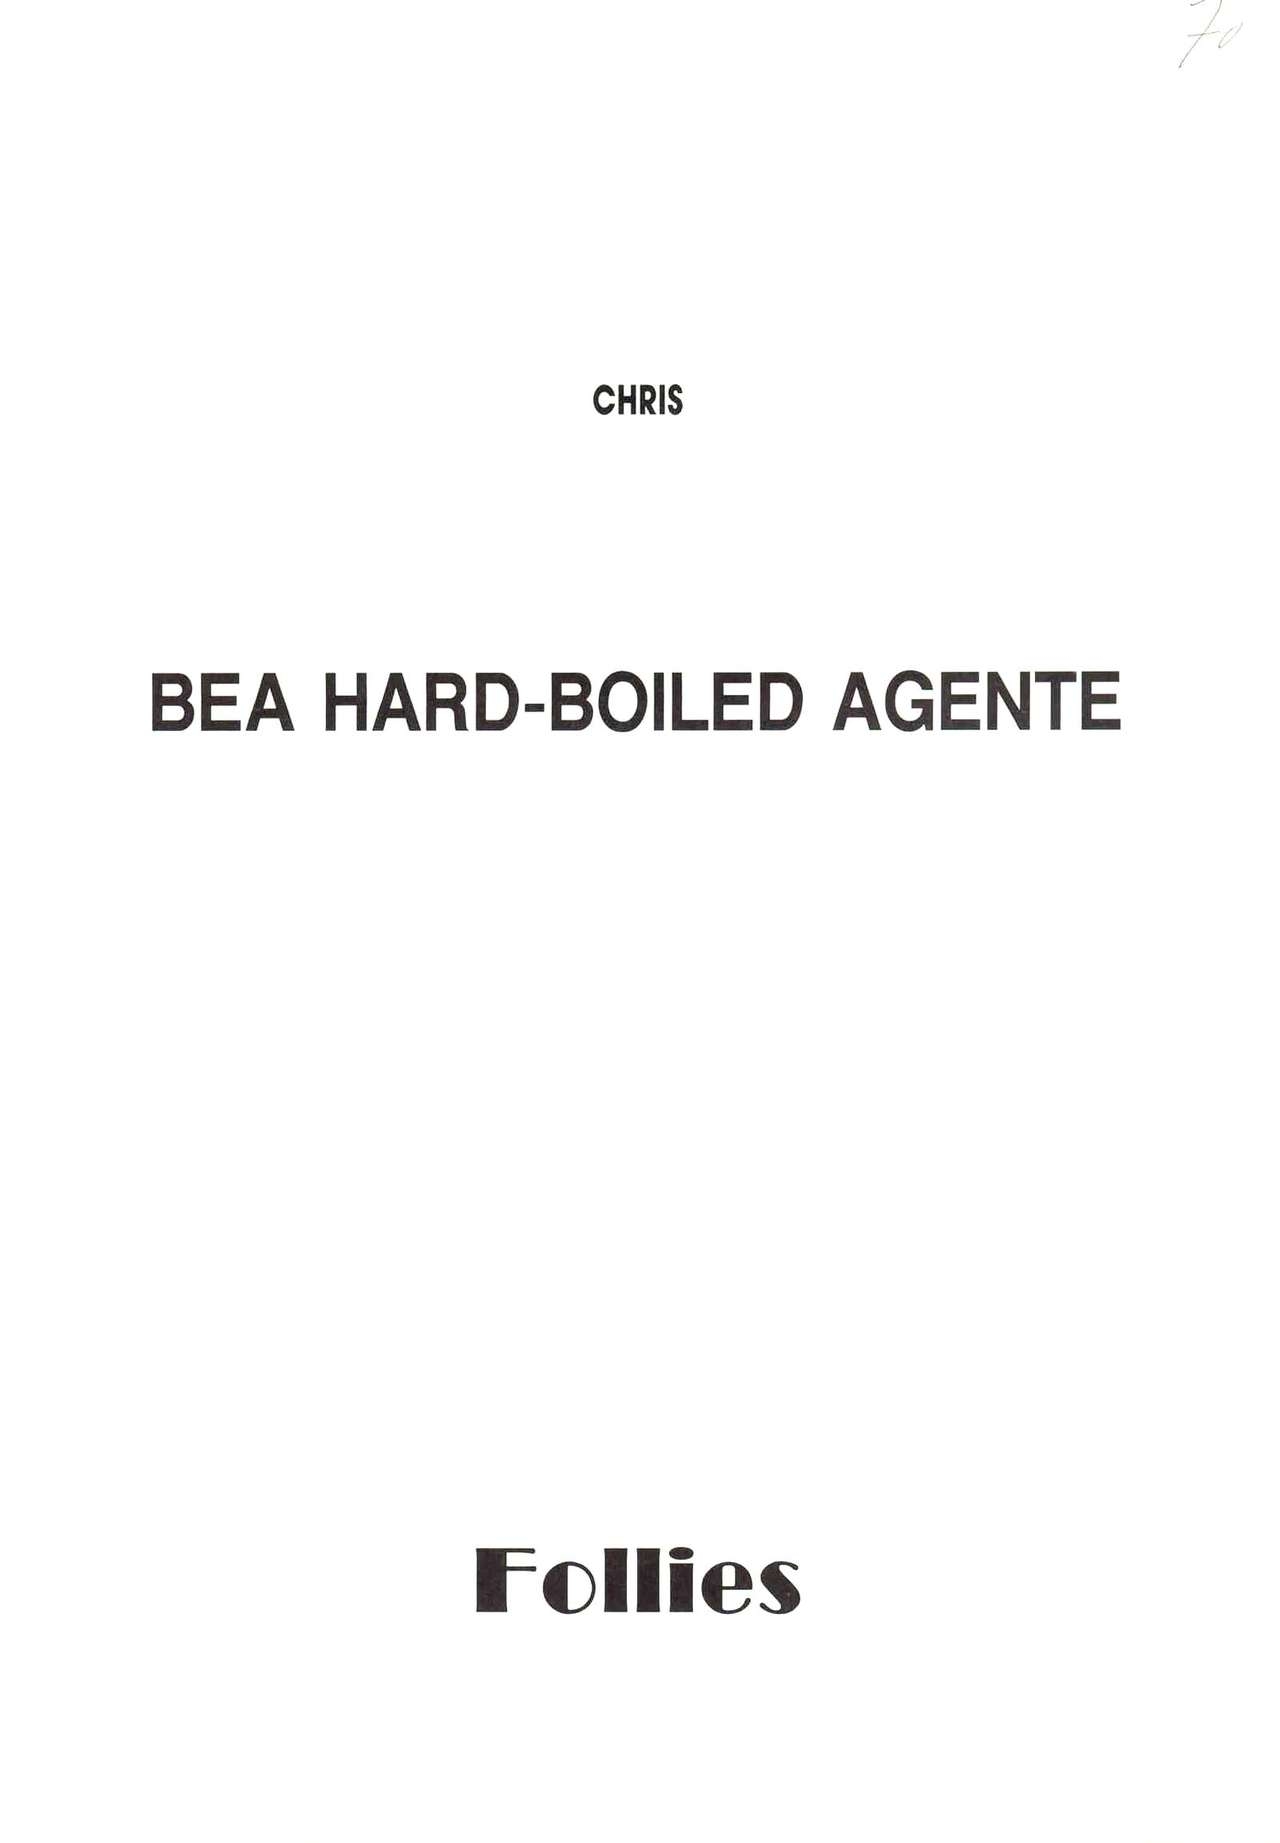 (Chris) Bea Hard-Boiled Agente (dutch) 1